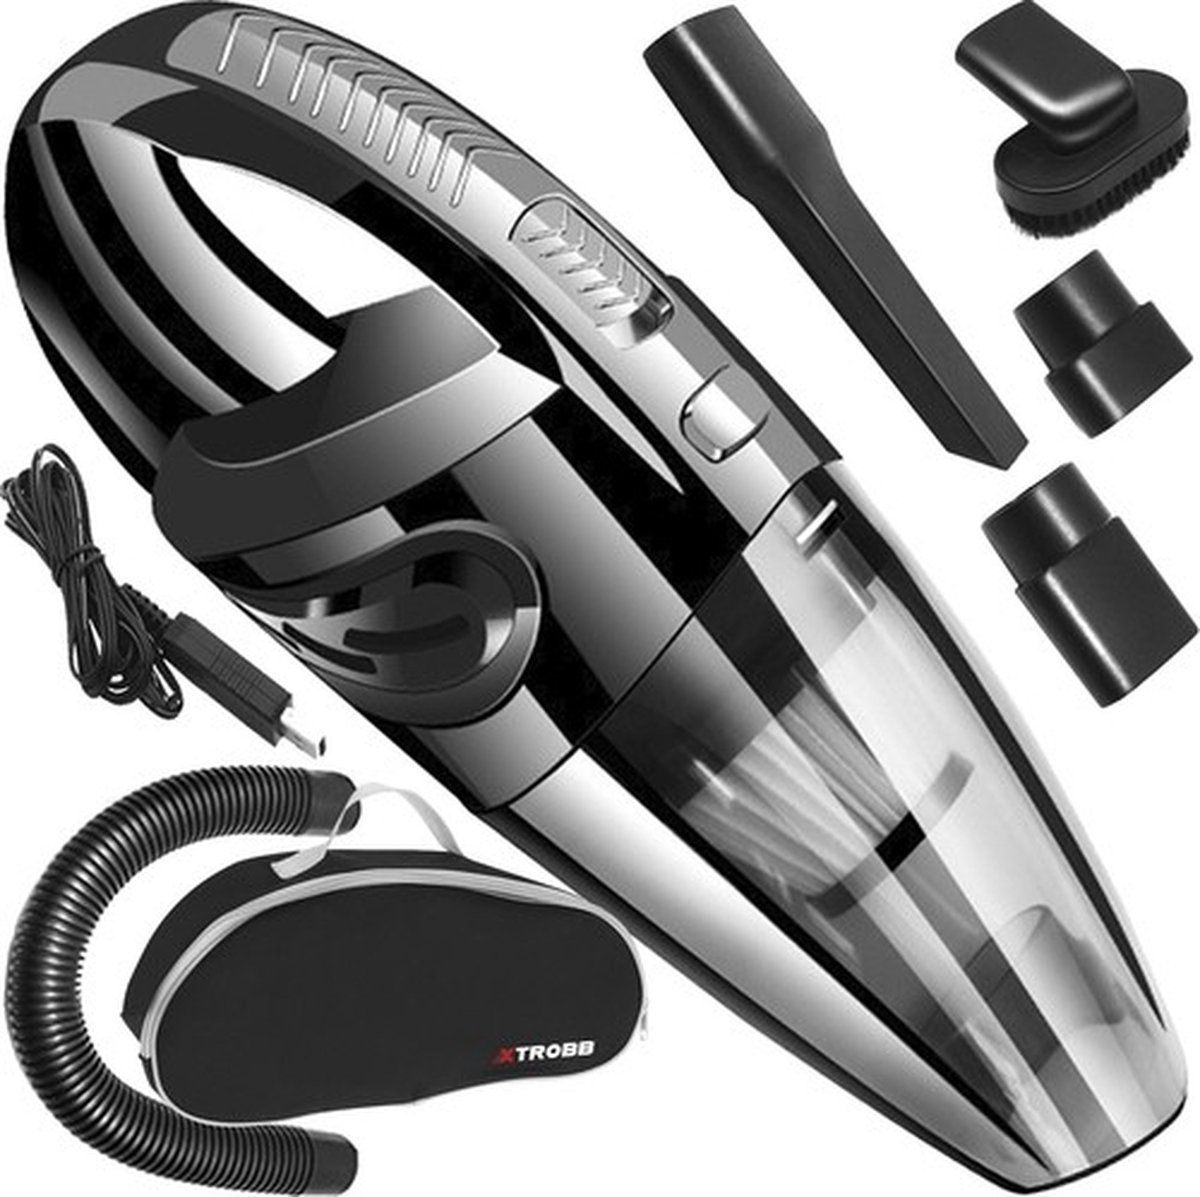 XTROBB - Kruimelzuiger - Vacuumcleaner - Autostofzuiger - USB oplaadbaar - Snoerloos - 120W